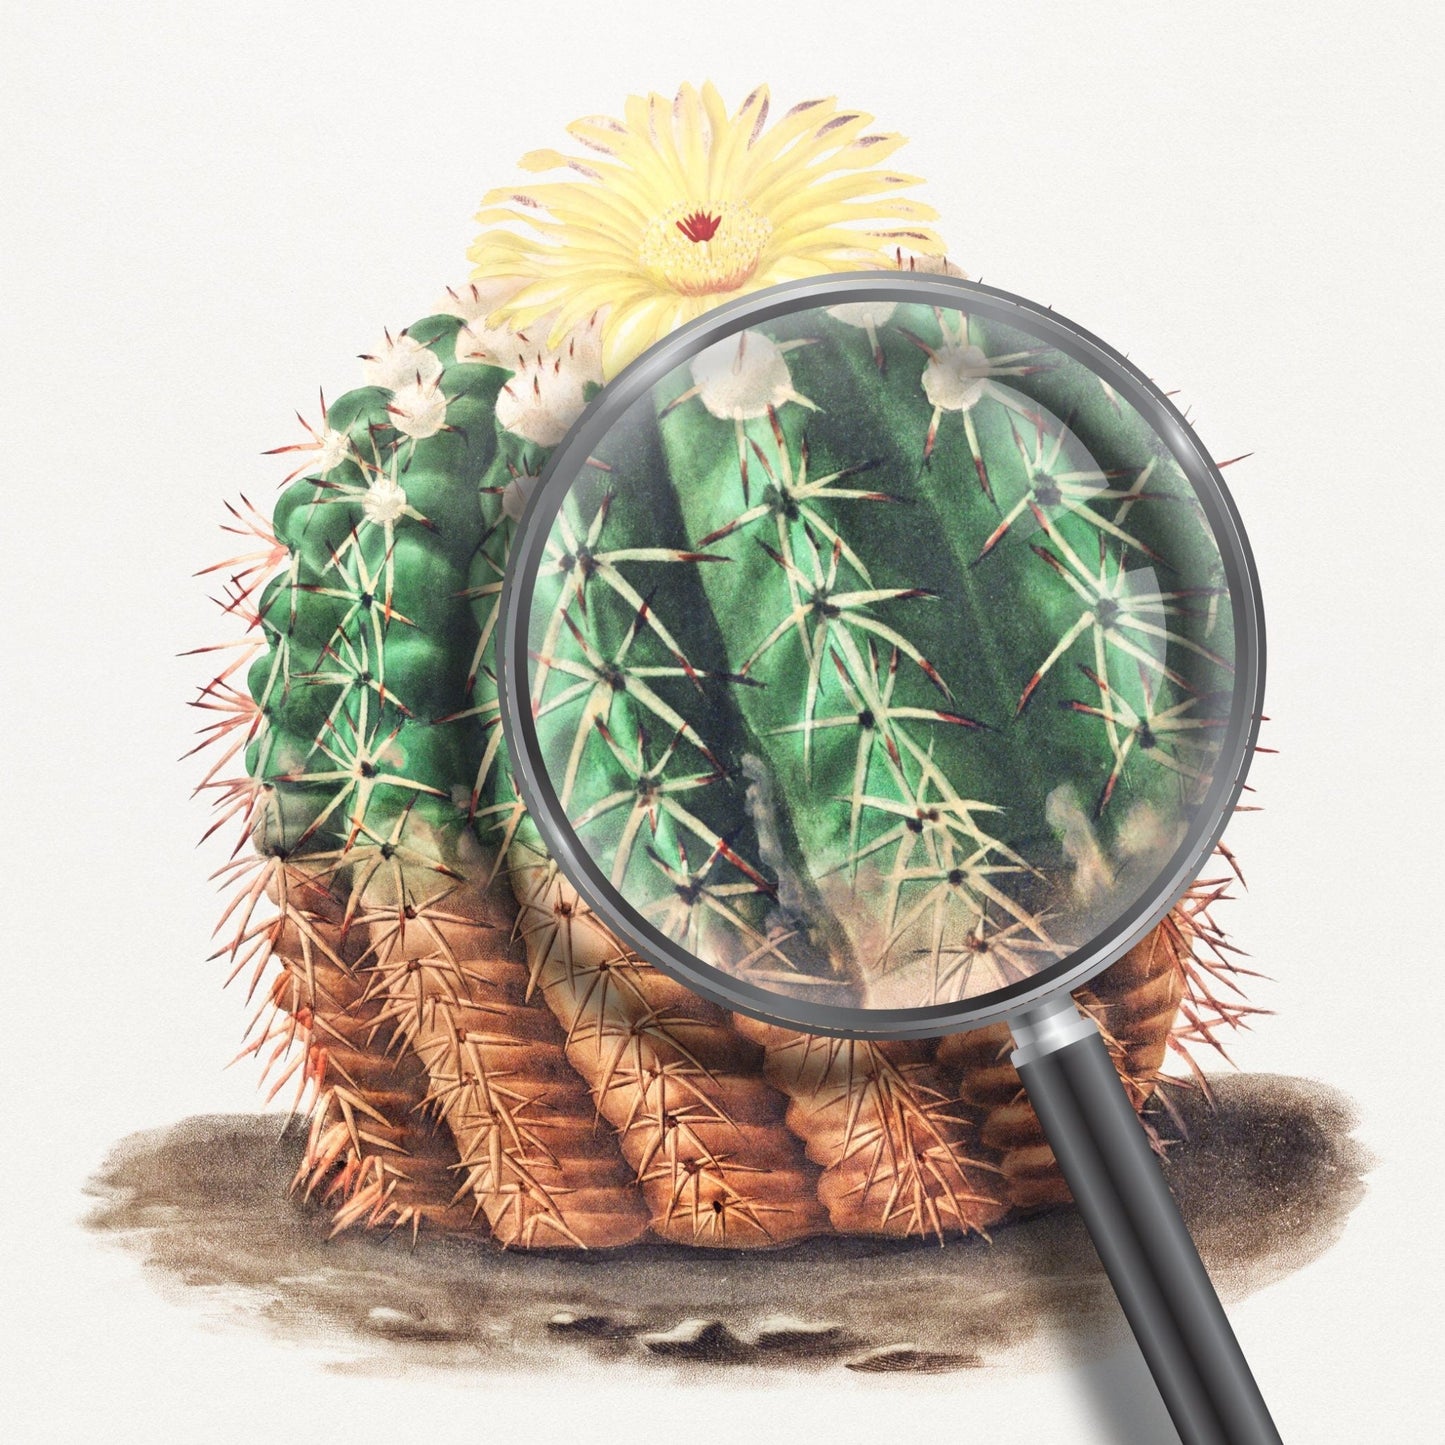 Golden Barrel Cactus (Lithographie Botanique)